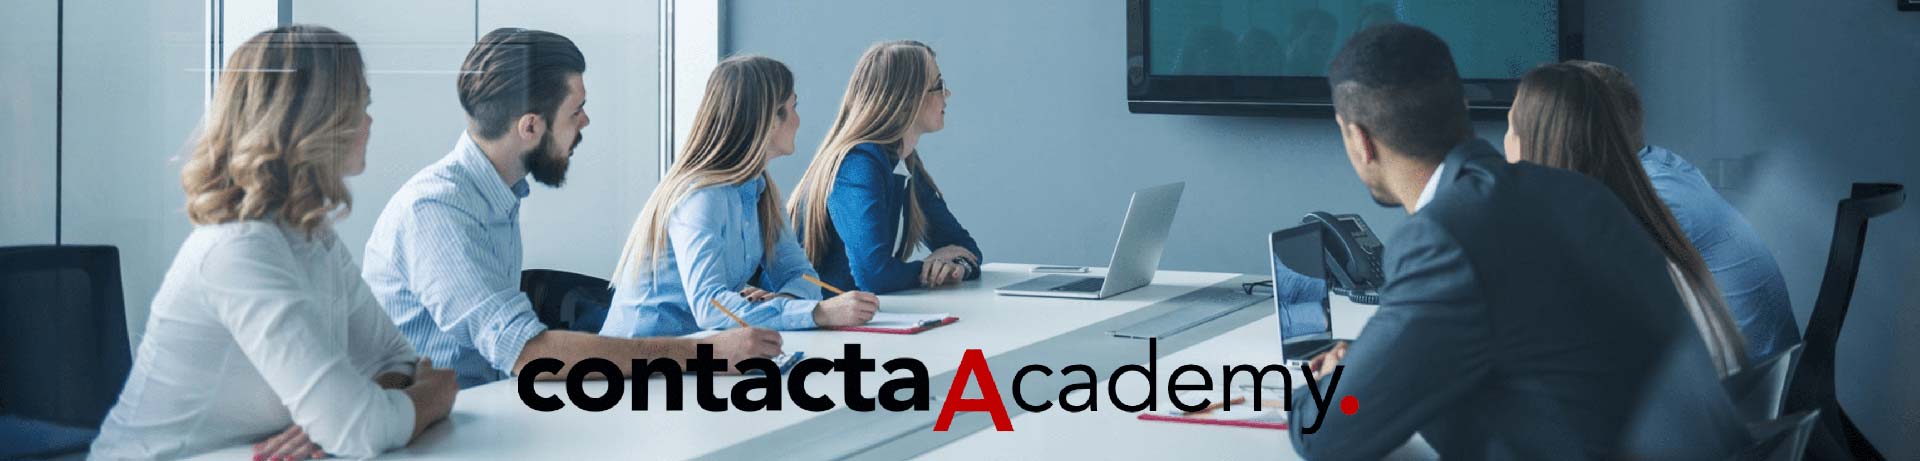 contacta-academy